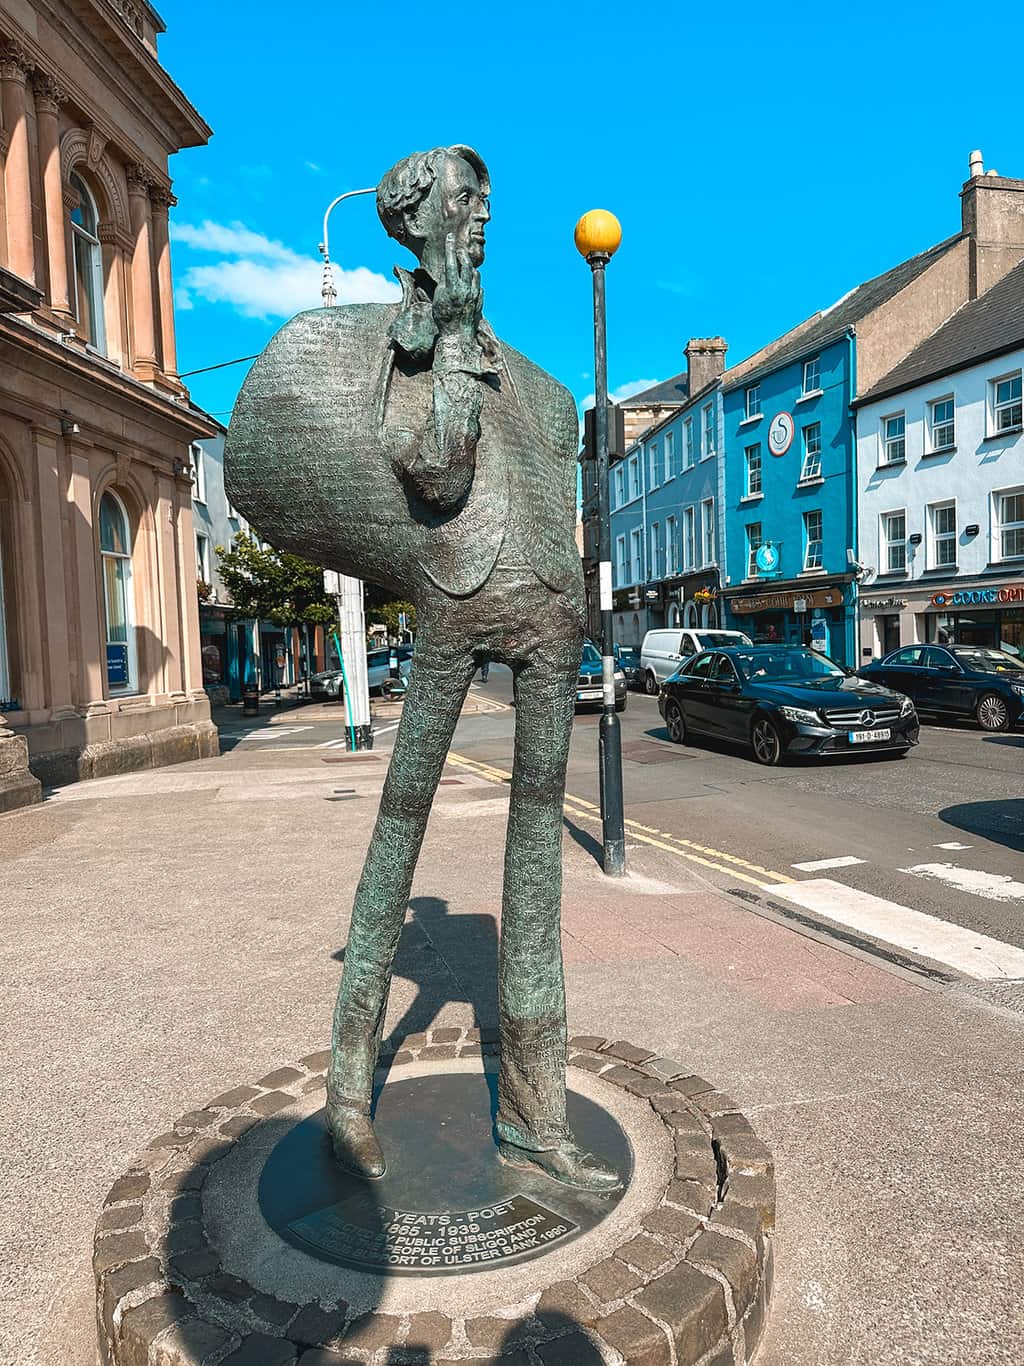 WB Yeats statue Sligo Ireland